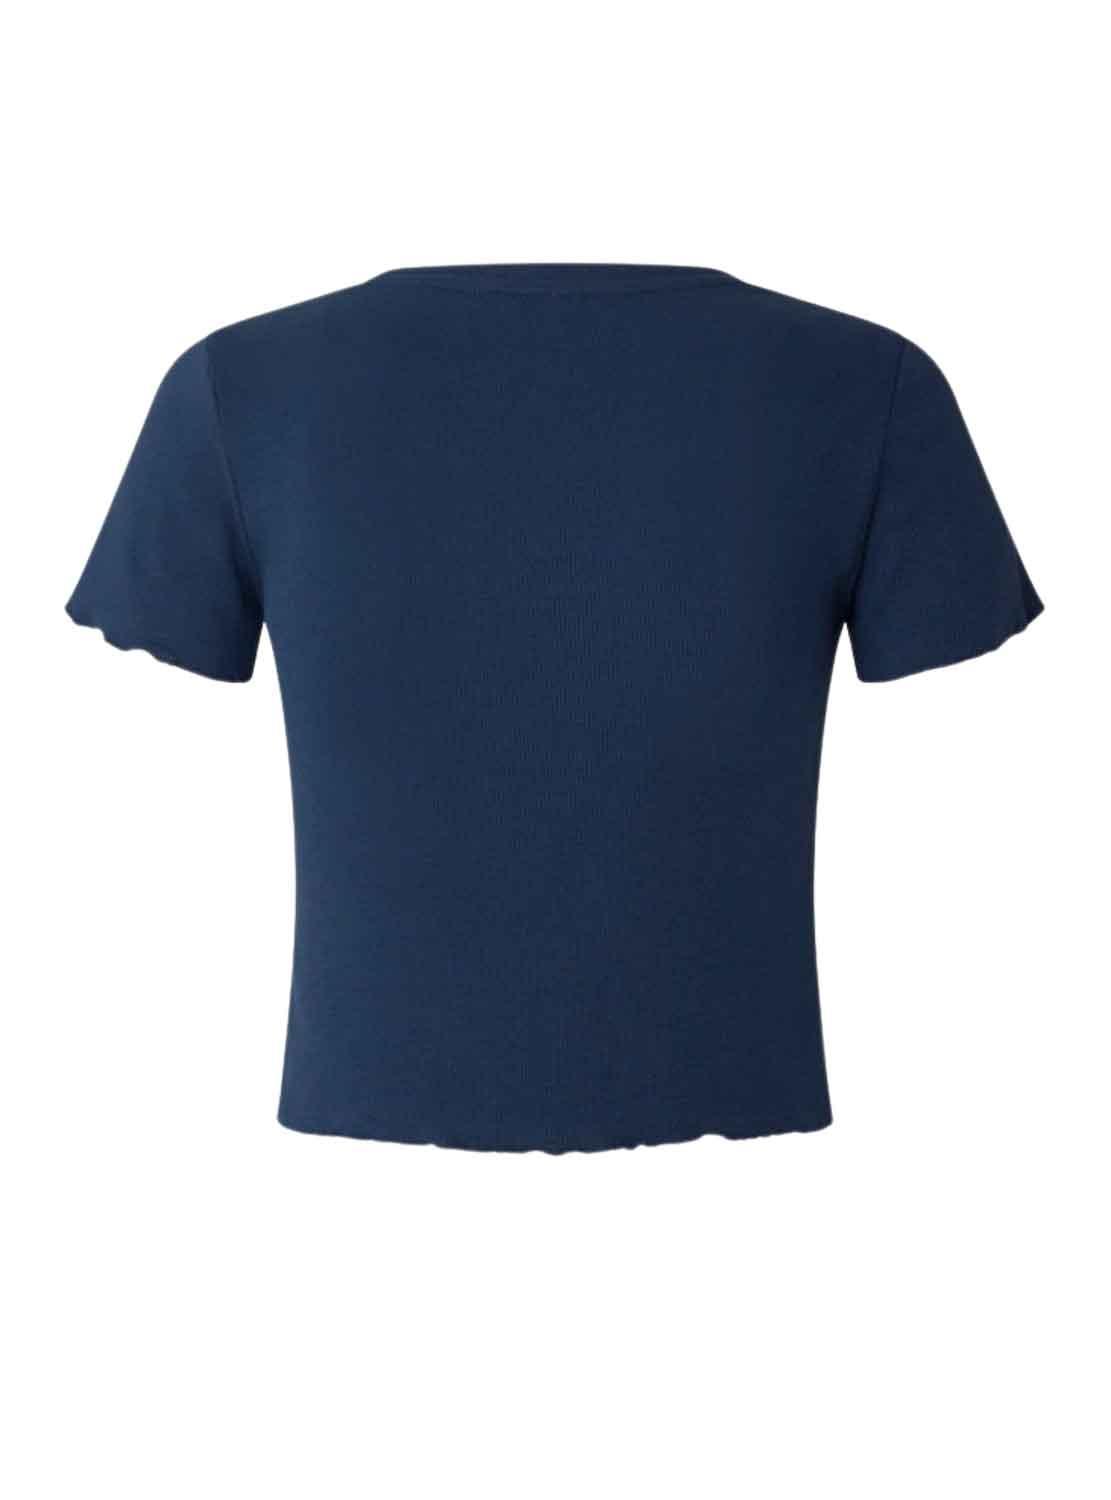 T-Shirt Pepe Jeans Cara Blu Navy per Donna